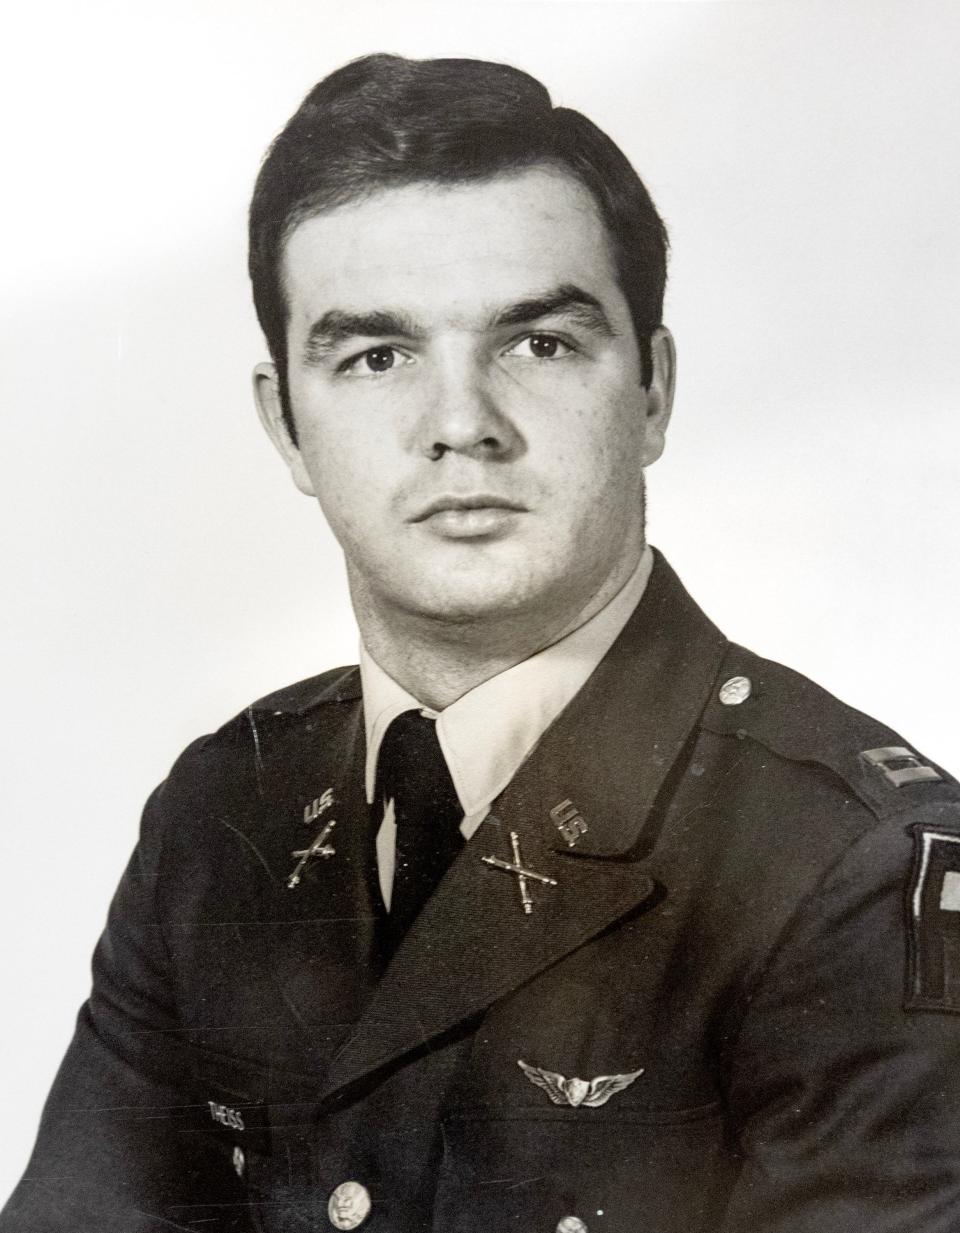 U.S. Army Capt. William "Bill" Theiss was a 1964 graduate of Glenwood High School.